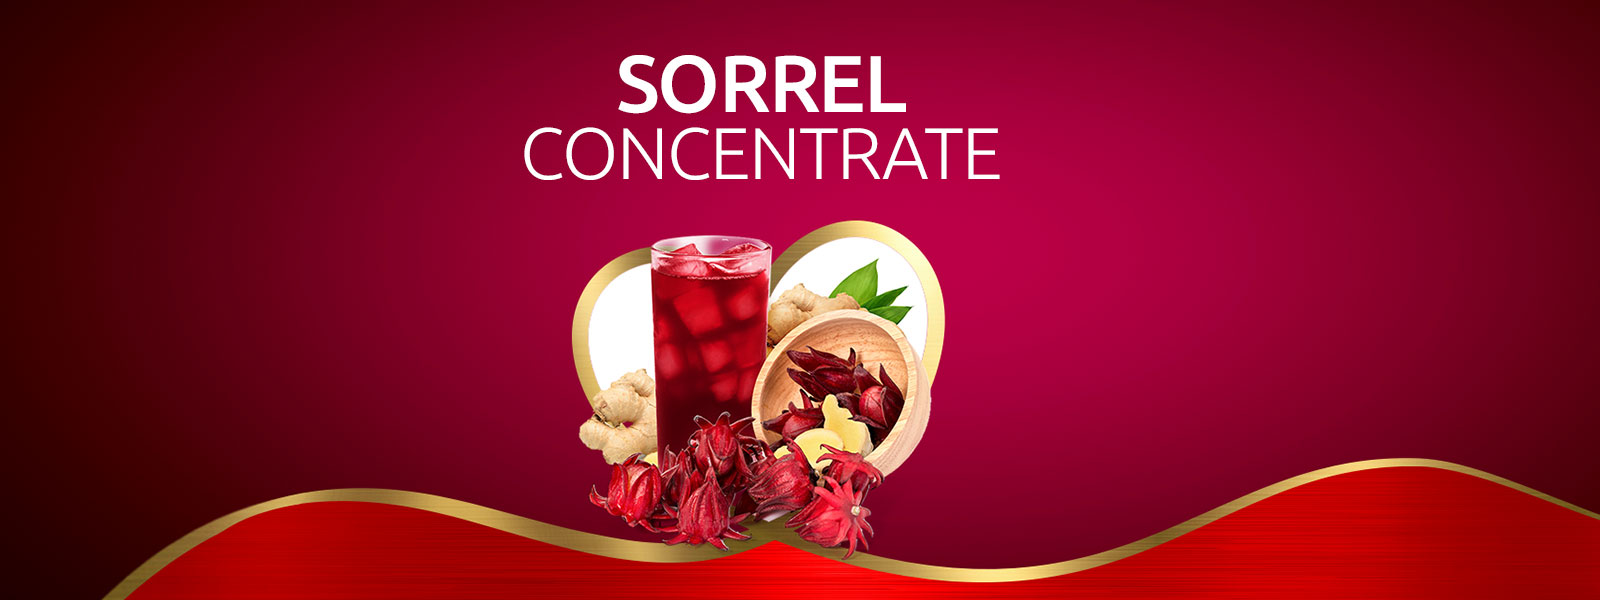 delect-sorrel-concentrate